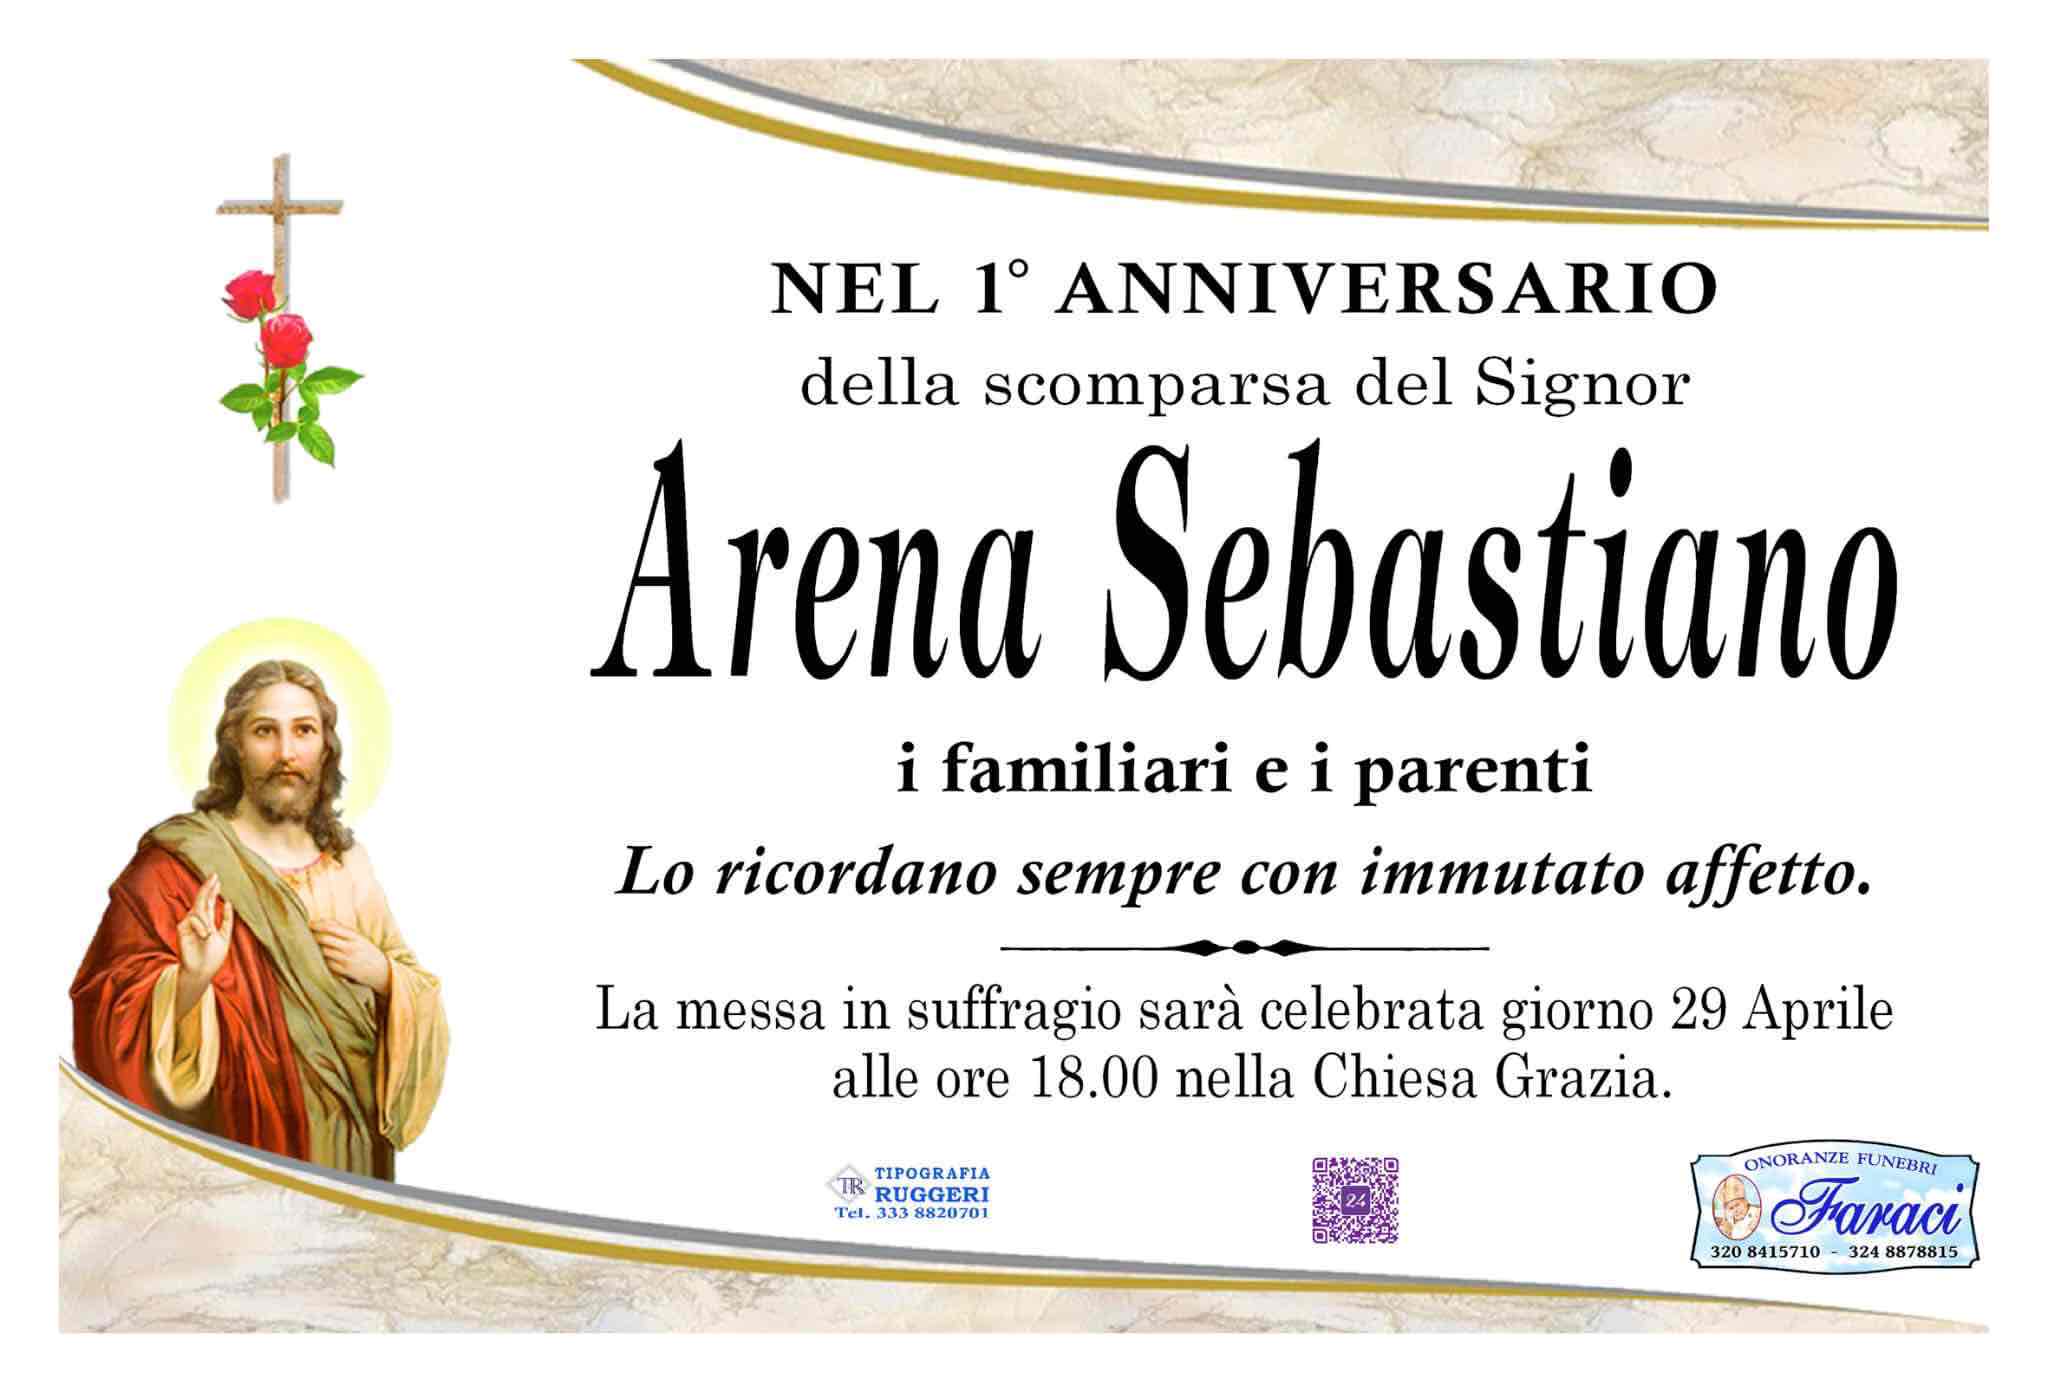 Sebastiano Arena